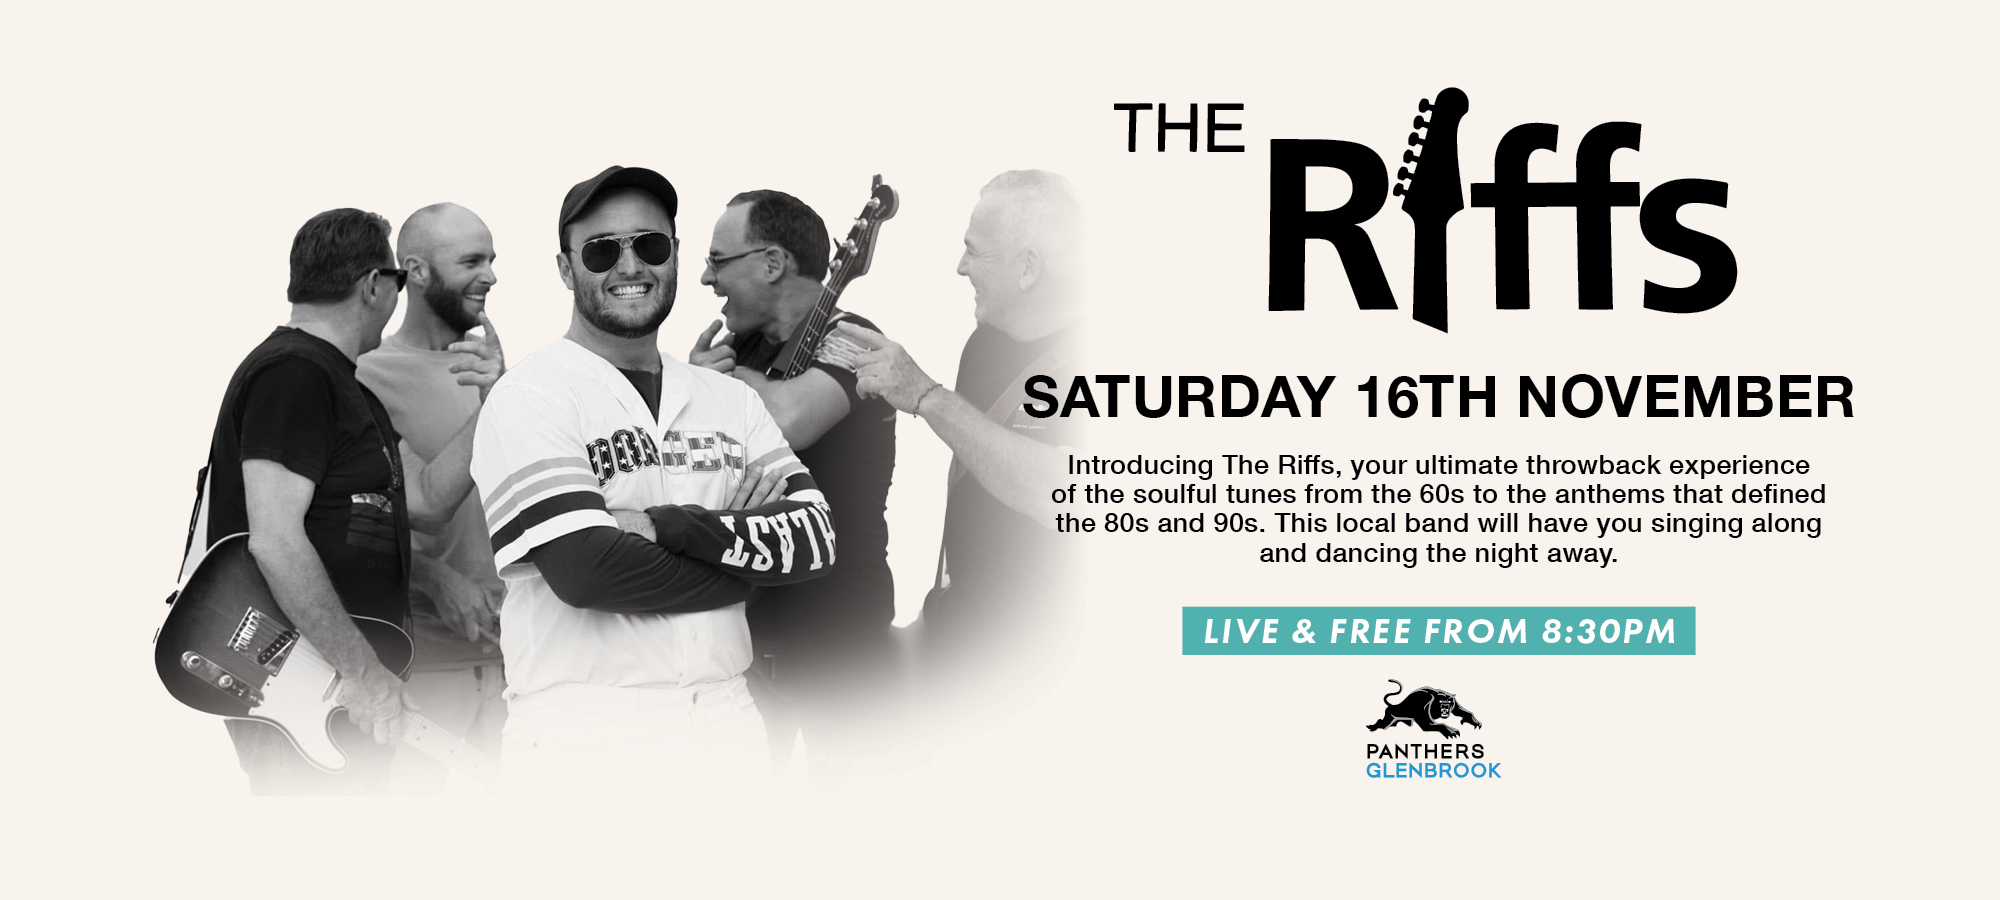 The Riffs – Saturday Live Entertainment in November